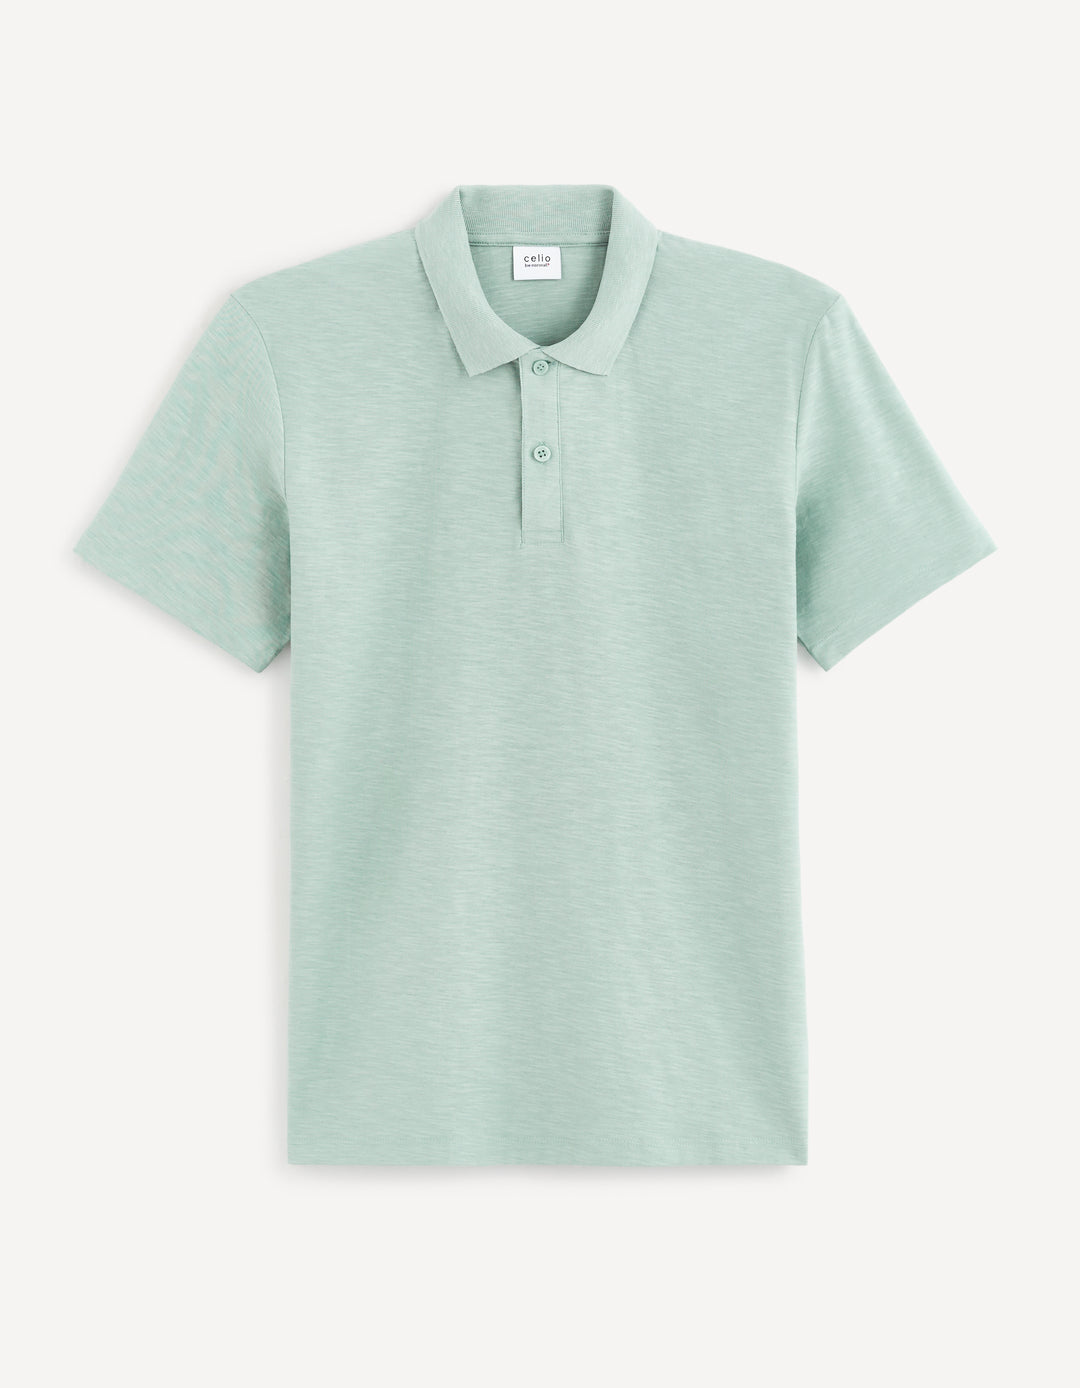 100% cotton jersey polo shirt